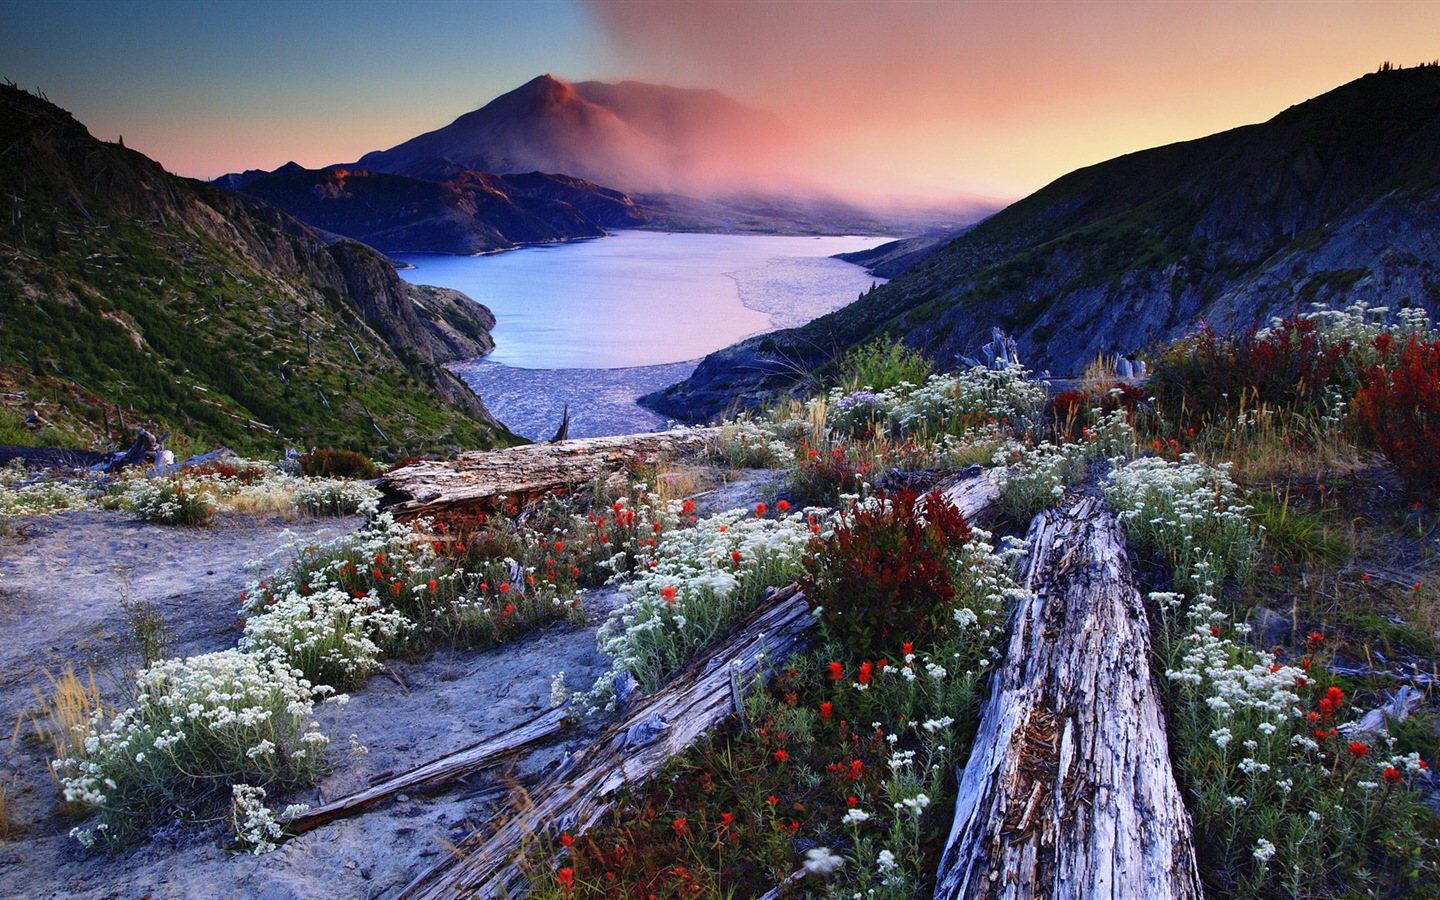 Fondos de pantalla de alta definición del paisaje volcánico lago #10 - 1440x900